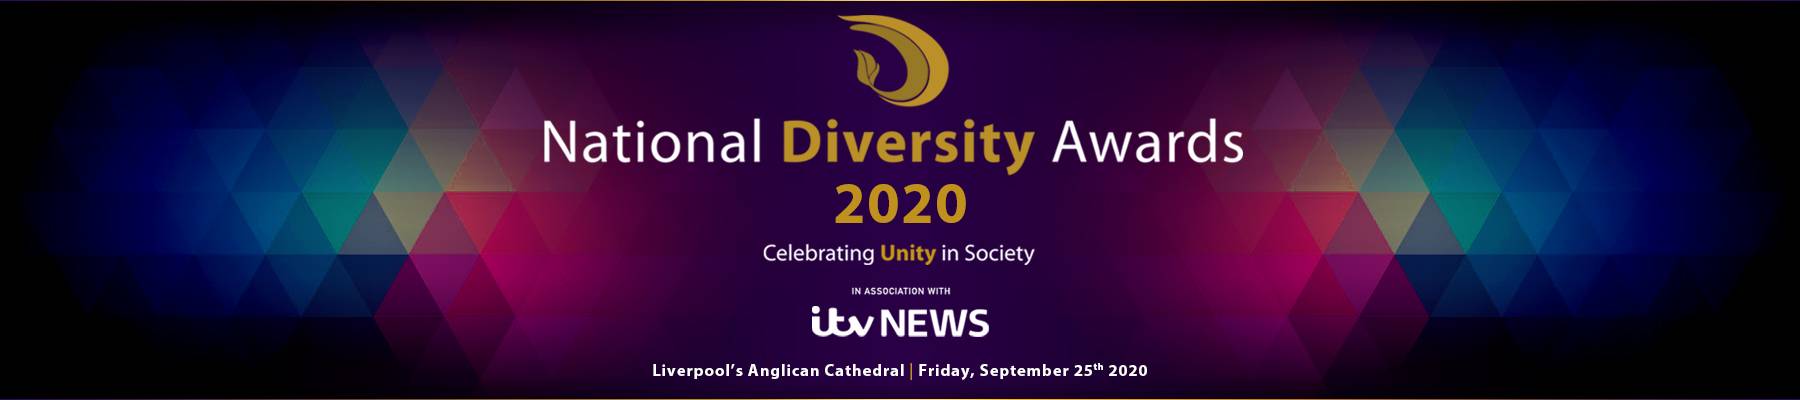 National Diversity Awards 2020